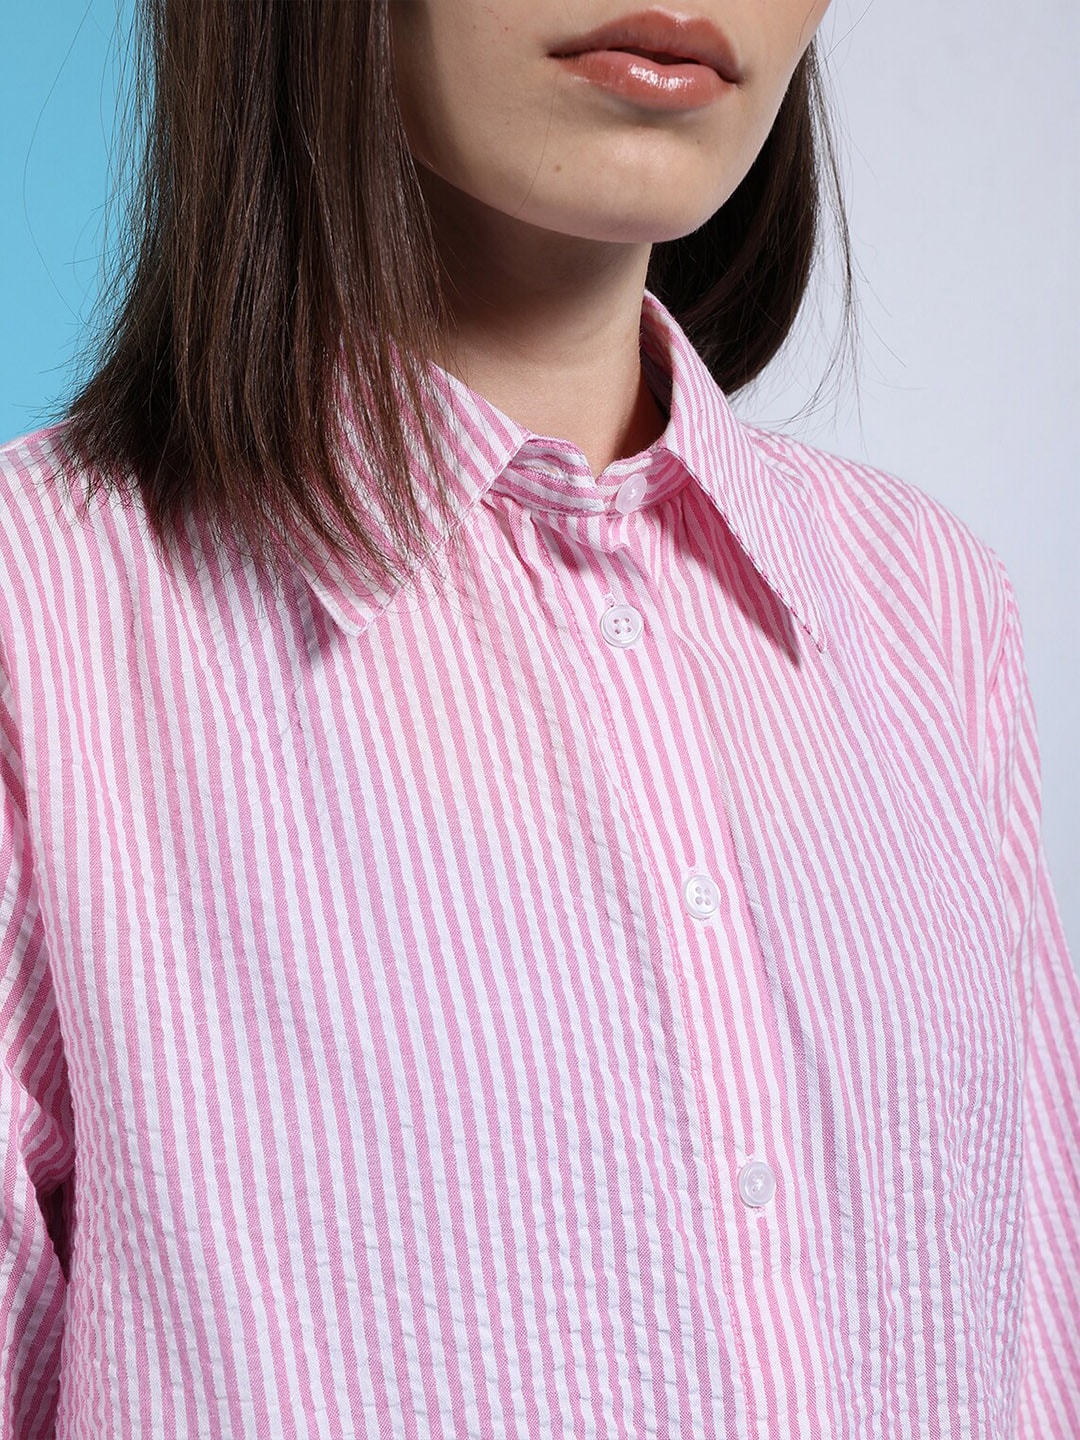 Shop Women Oversized Striped Seersucker Shirt Online.